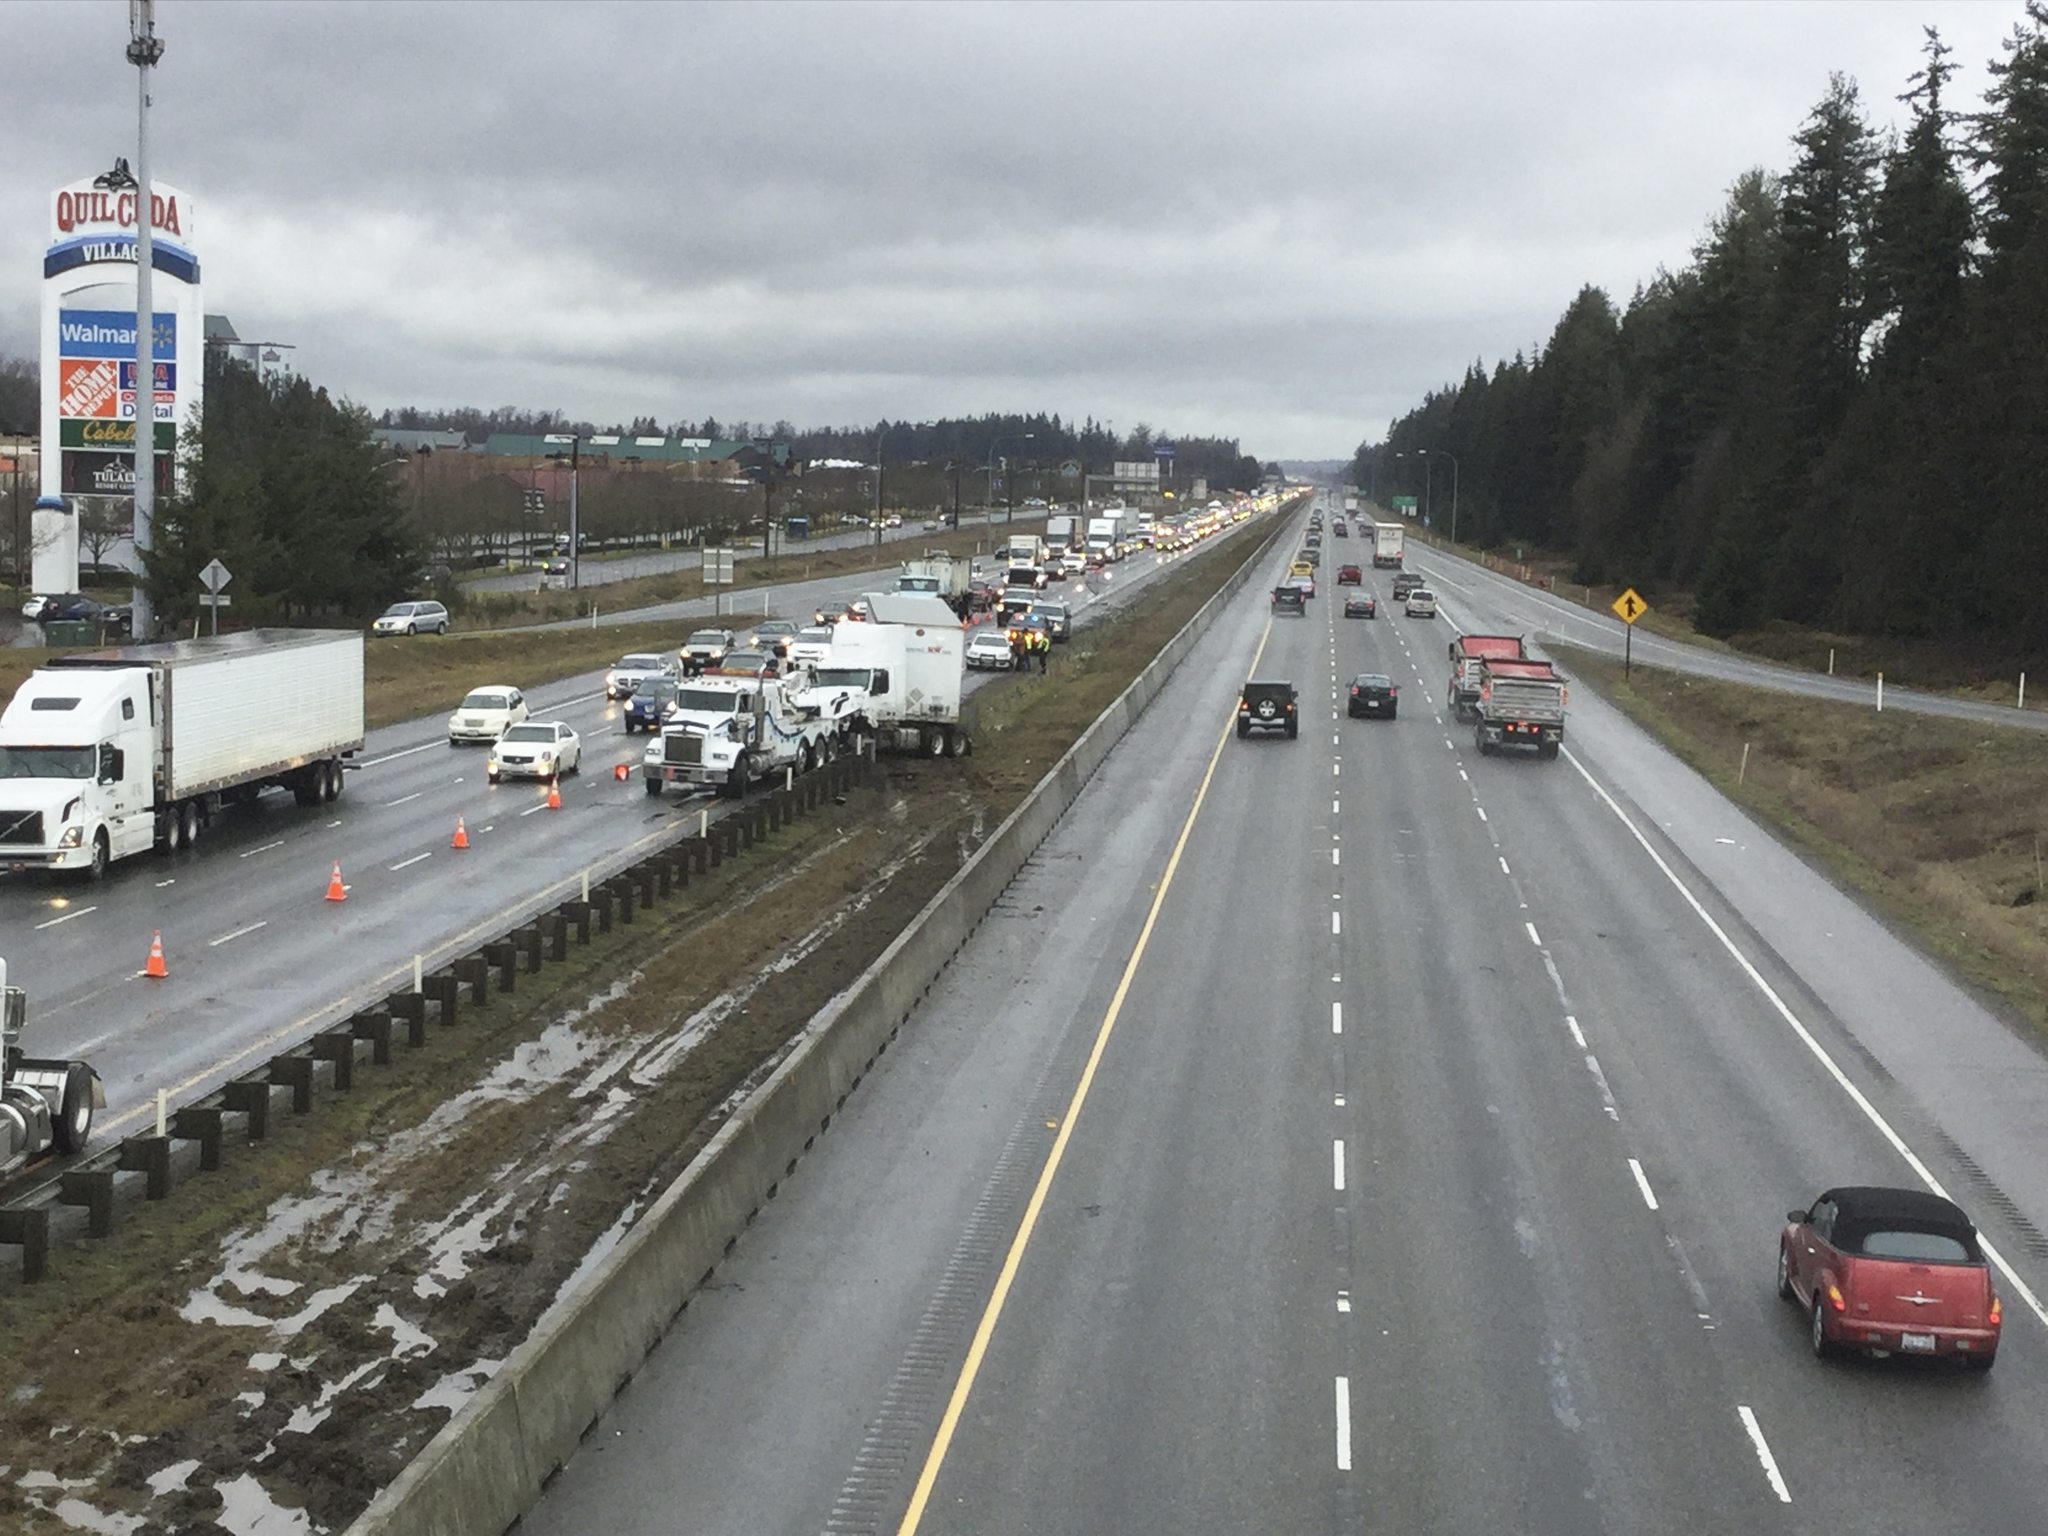 I-5 traffic standstill in Marysville forces semi-truck off road